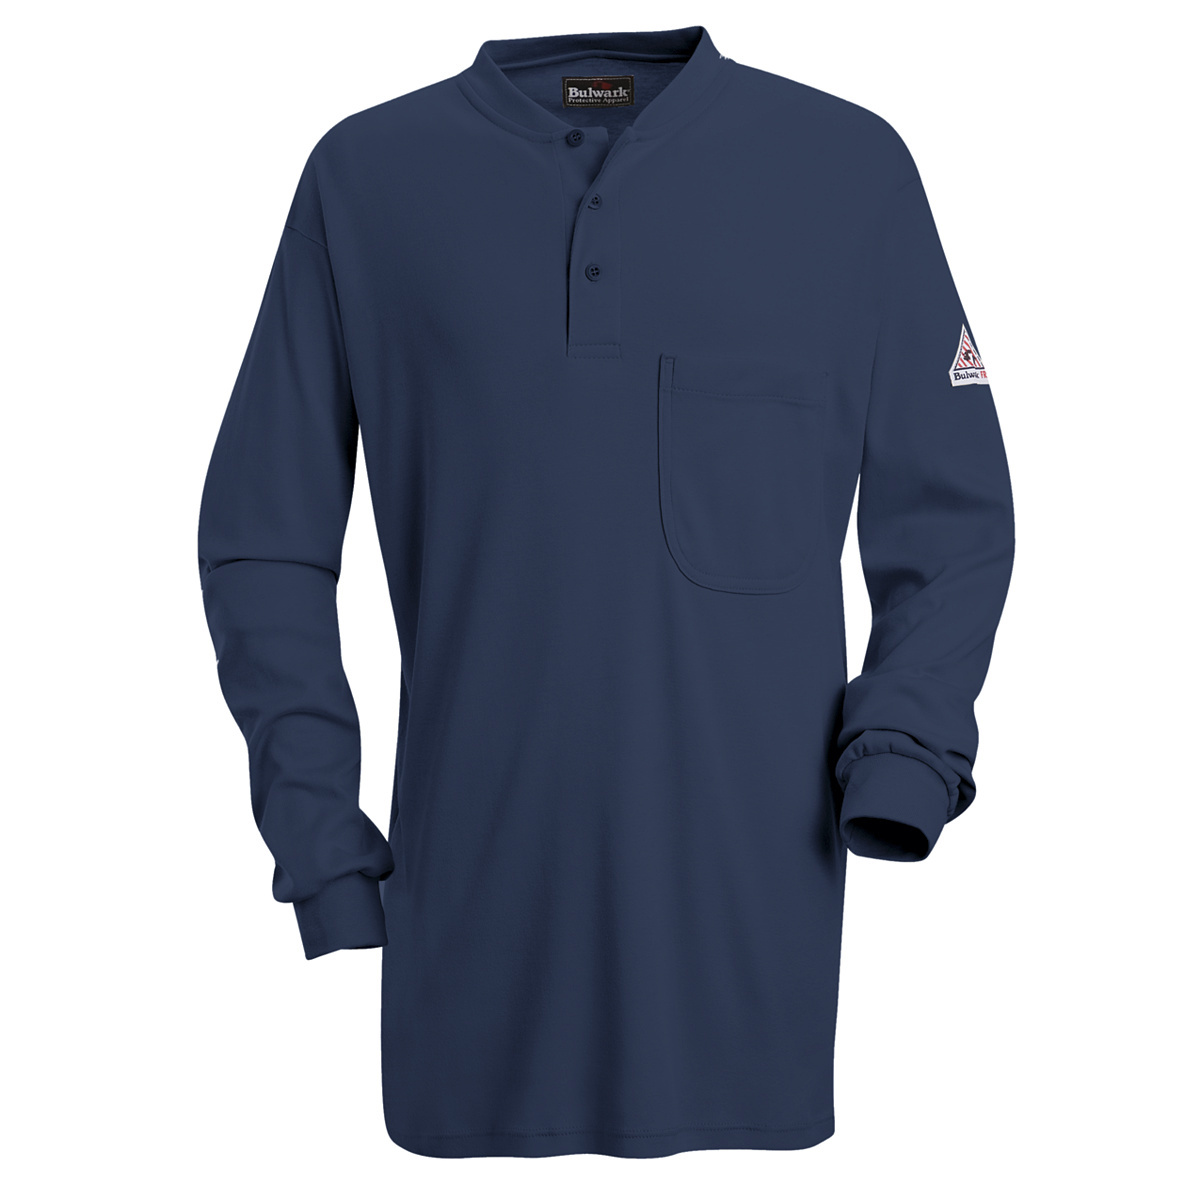 Bulwark® 4X Regular Navy Blue EXCEL FR® Interlock FR Cotton Flame Resistant Henley Shirt With Button Front Closure